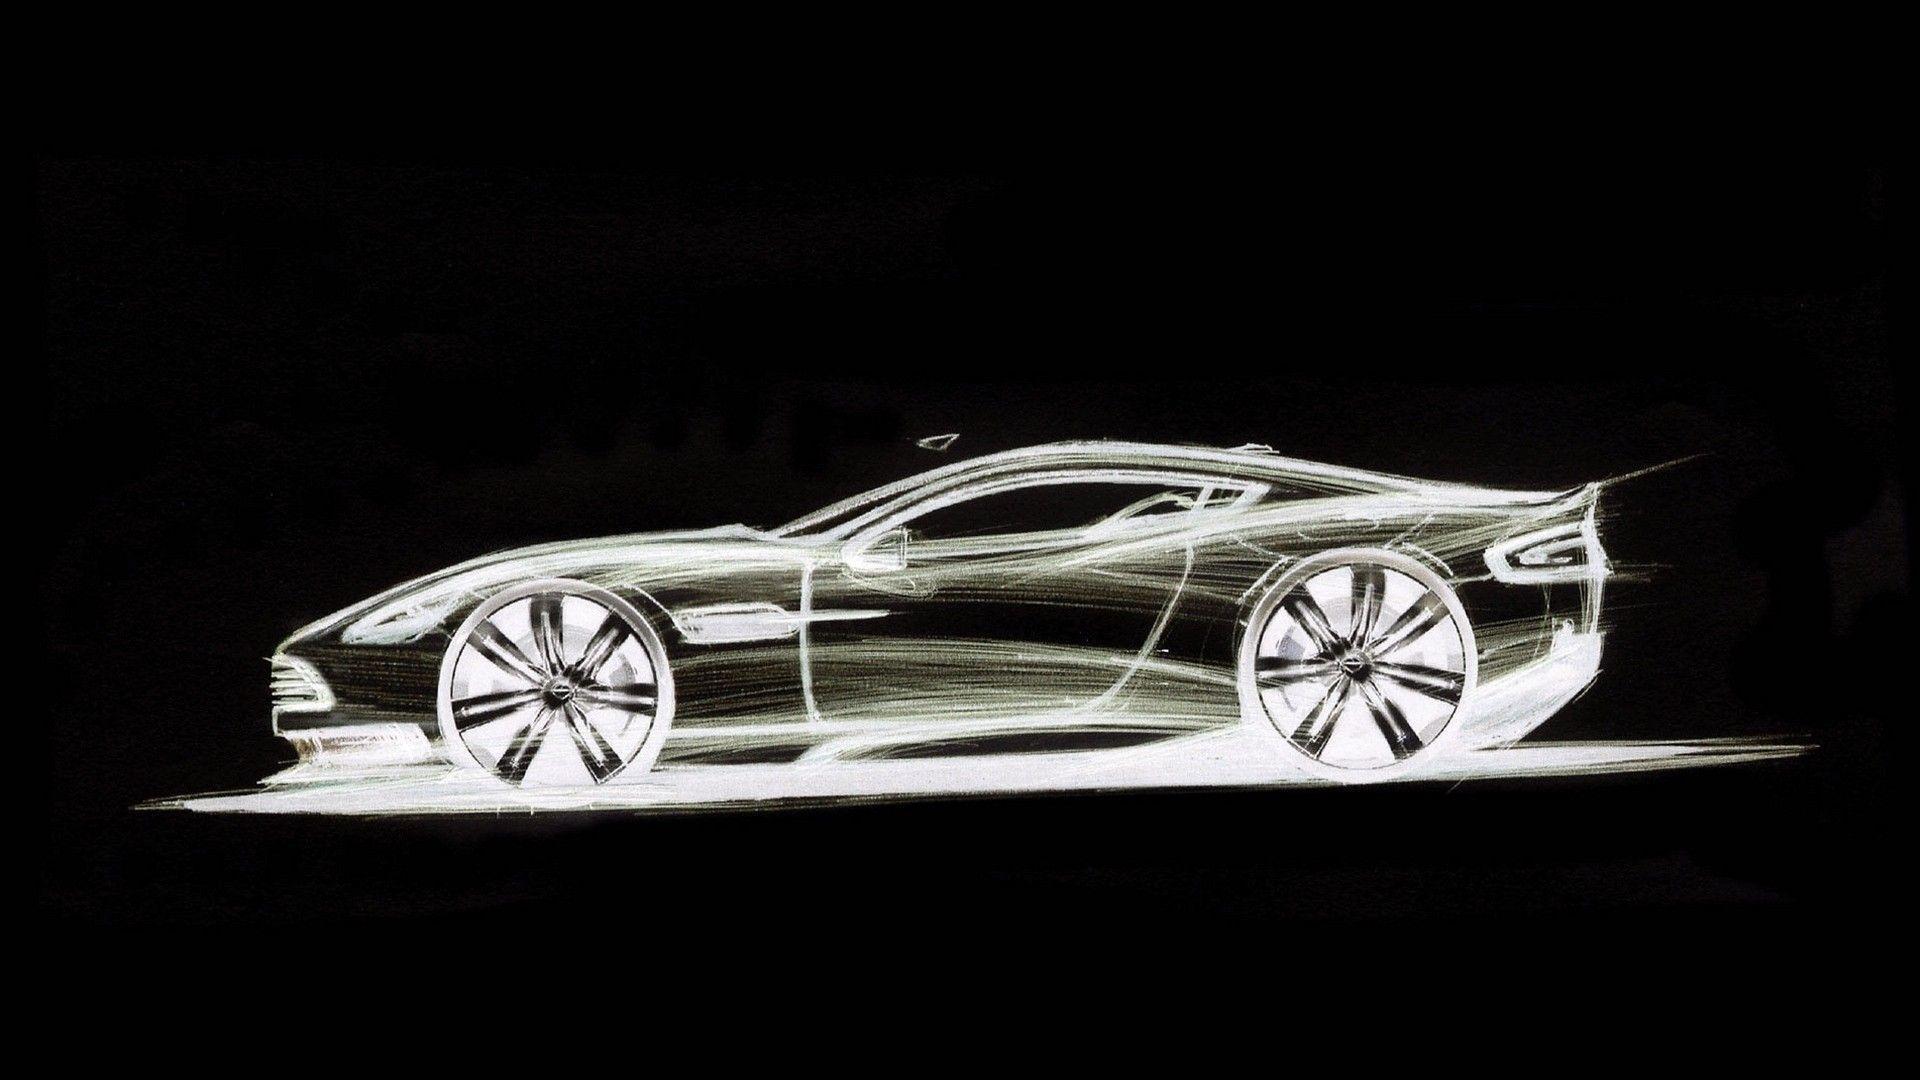 Maserati Sketch Widescreen Wallpaper Wide, 2014 Car Photo